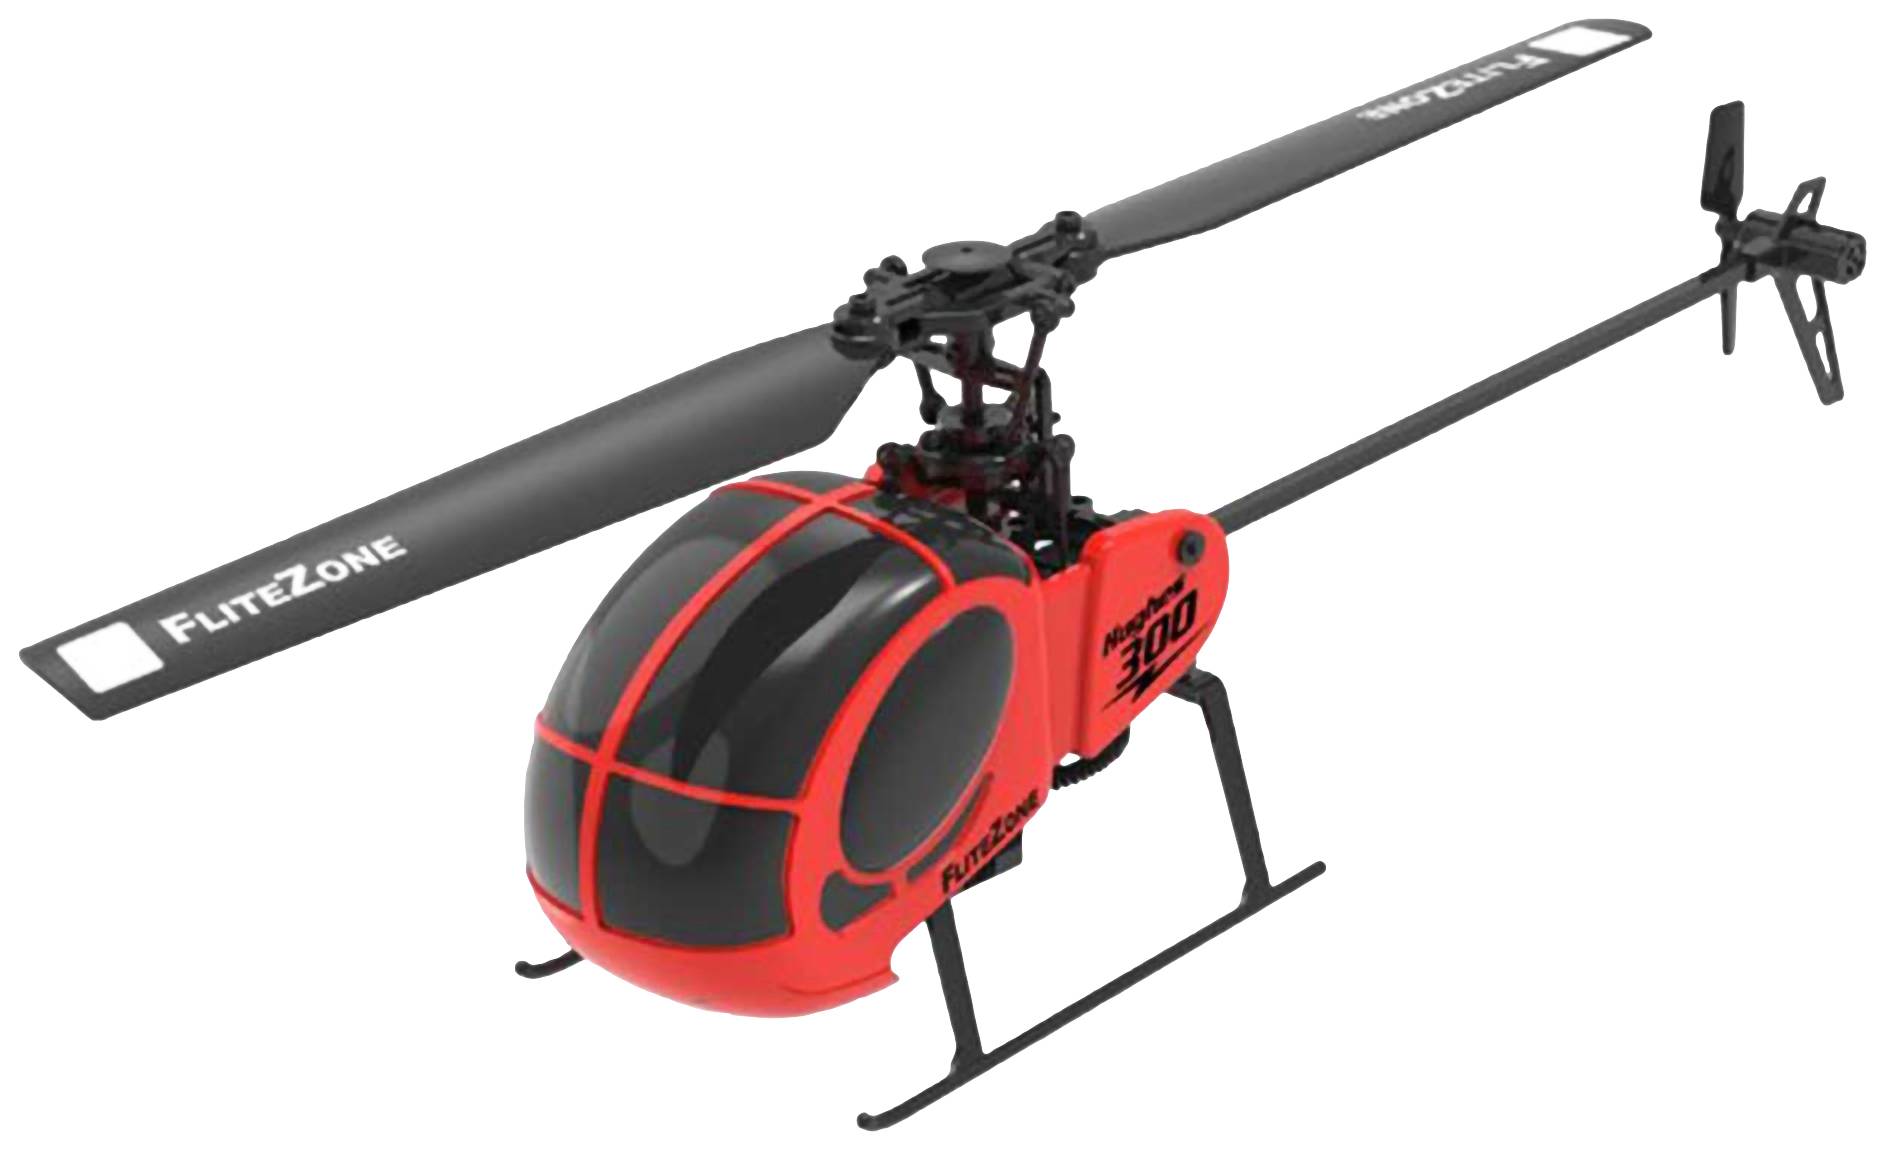 Voorloper B.C. afvoer Pichler Hughes 300 RC helikopter RTF kopen ? Conrad Electronic